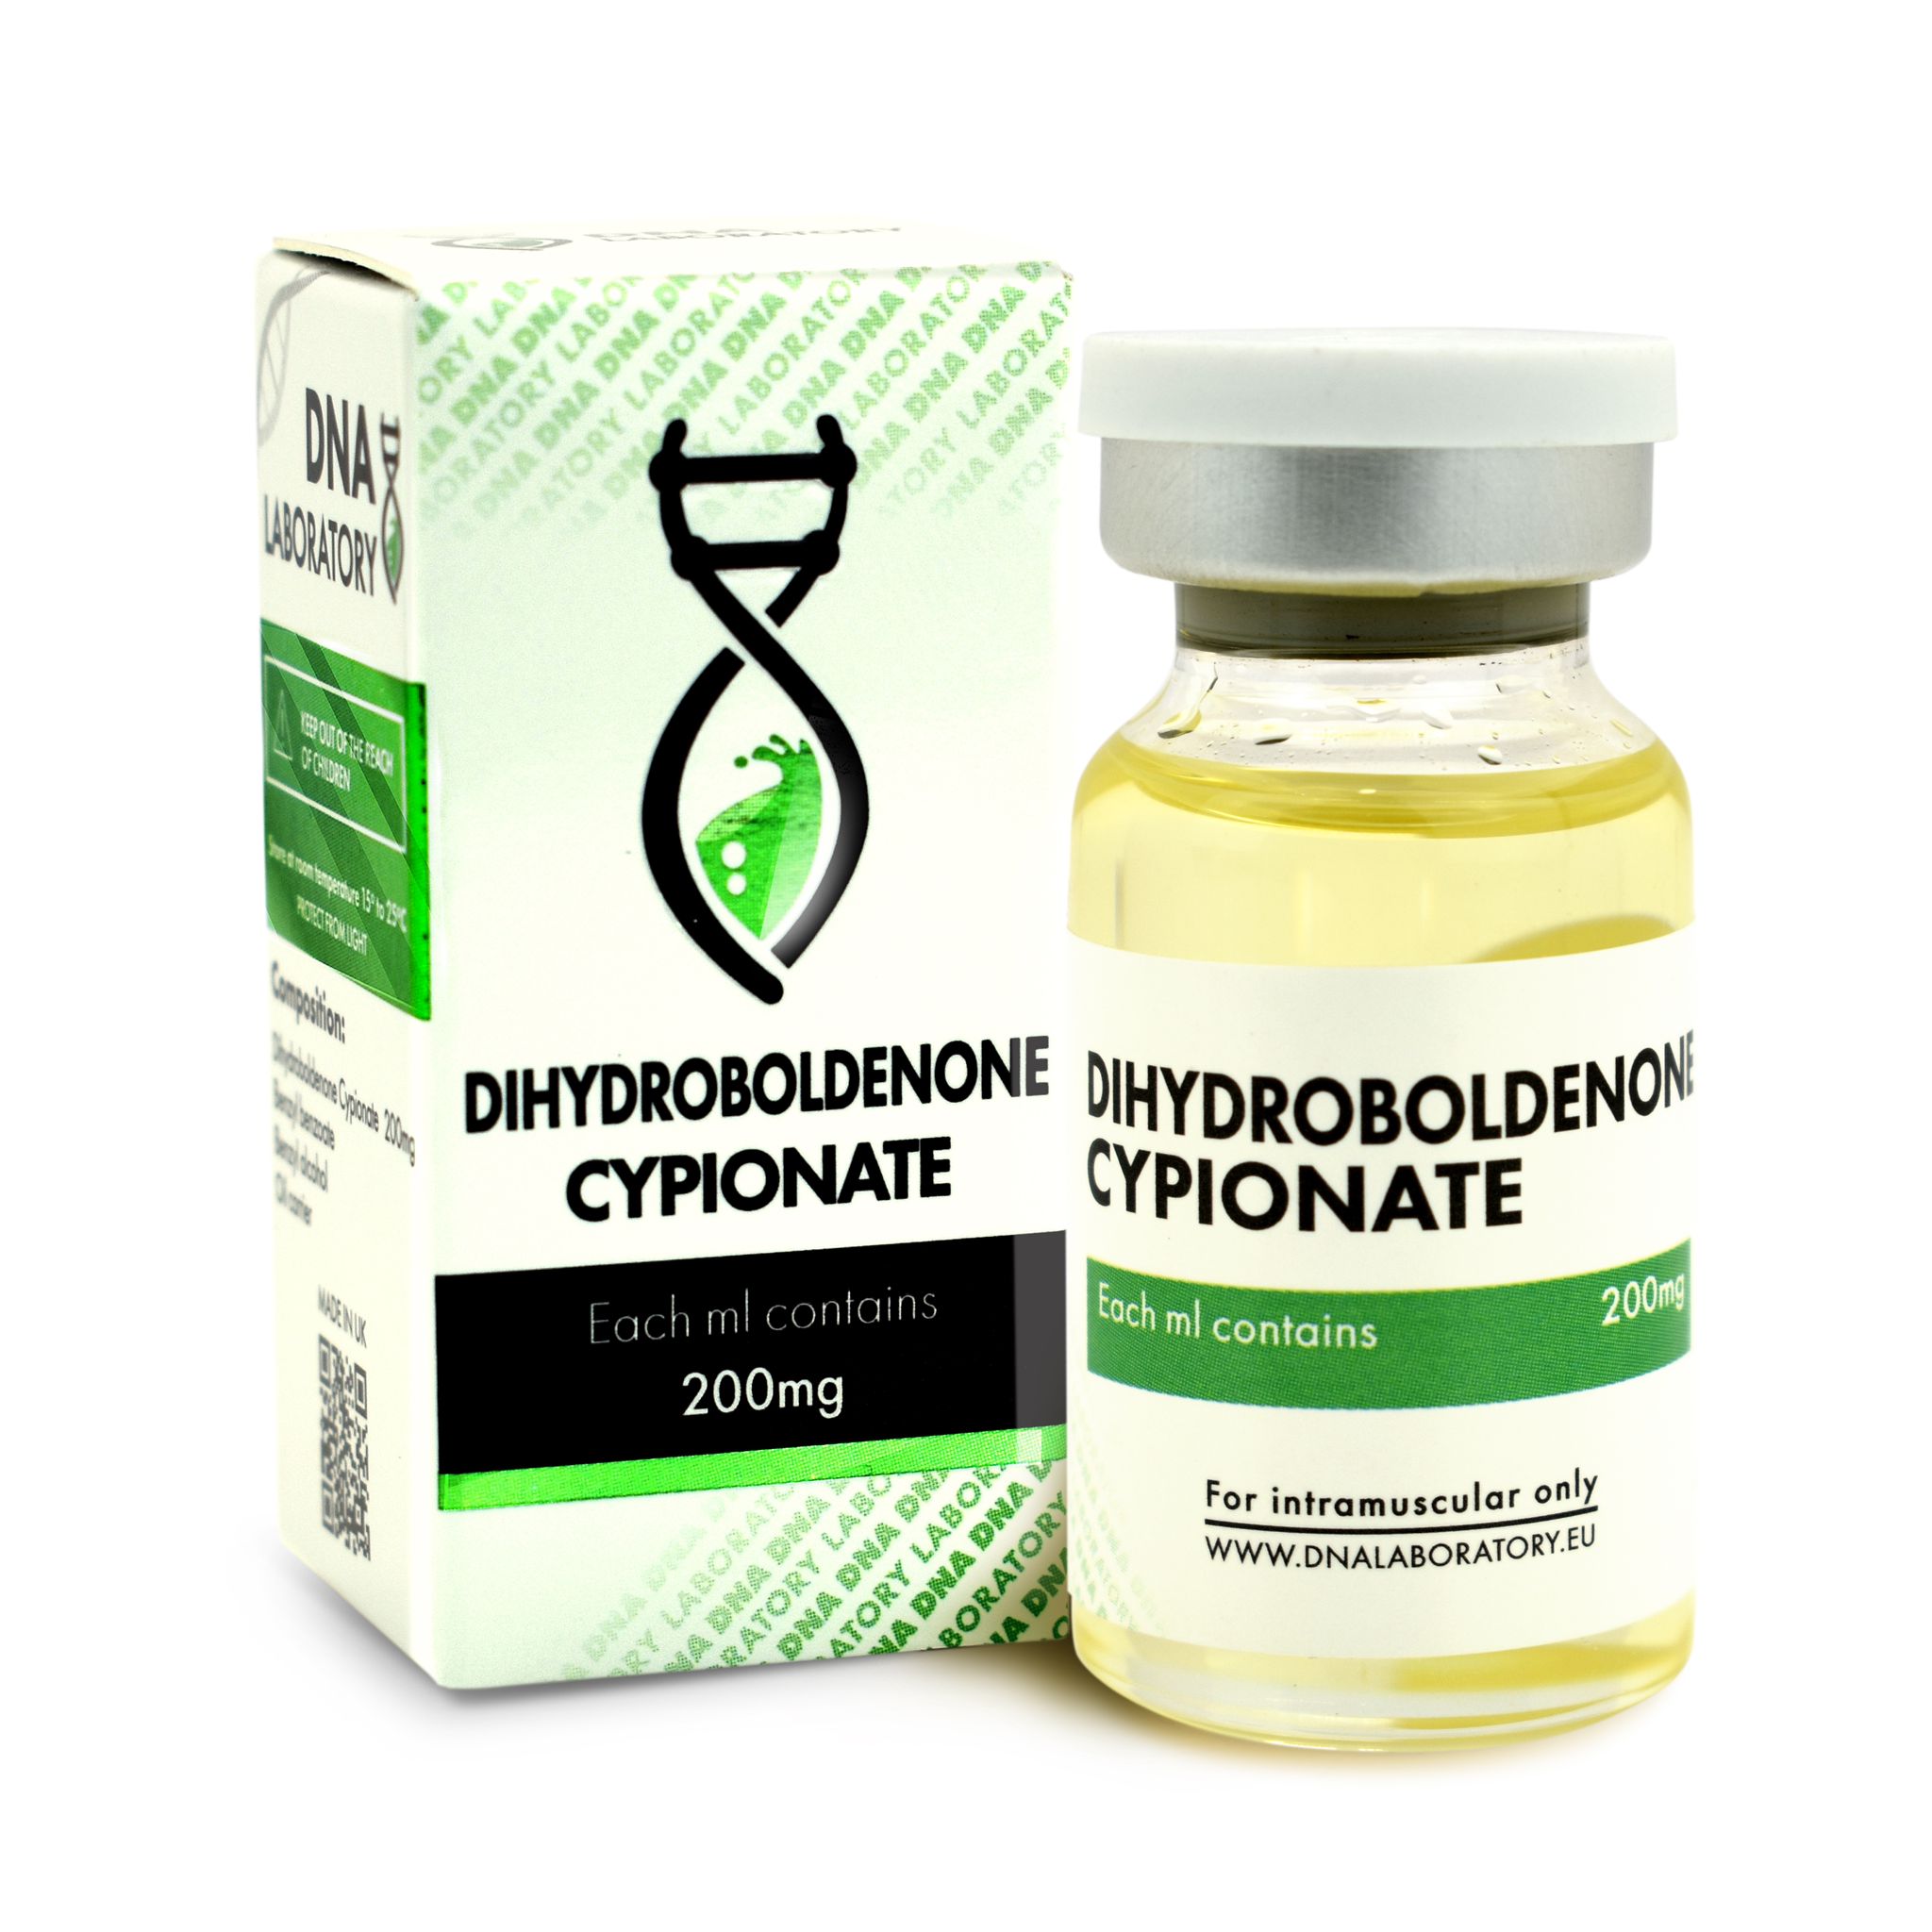 Dihydro- Boldenon 200(Dyhydroboldenone cypionate 200mg/ml)
10ml/ vial

